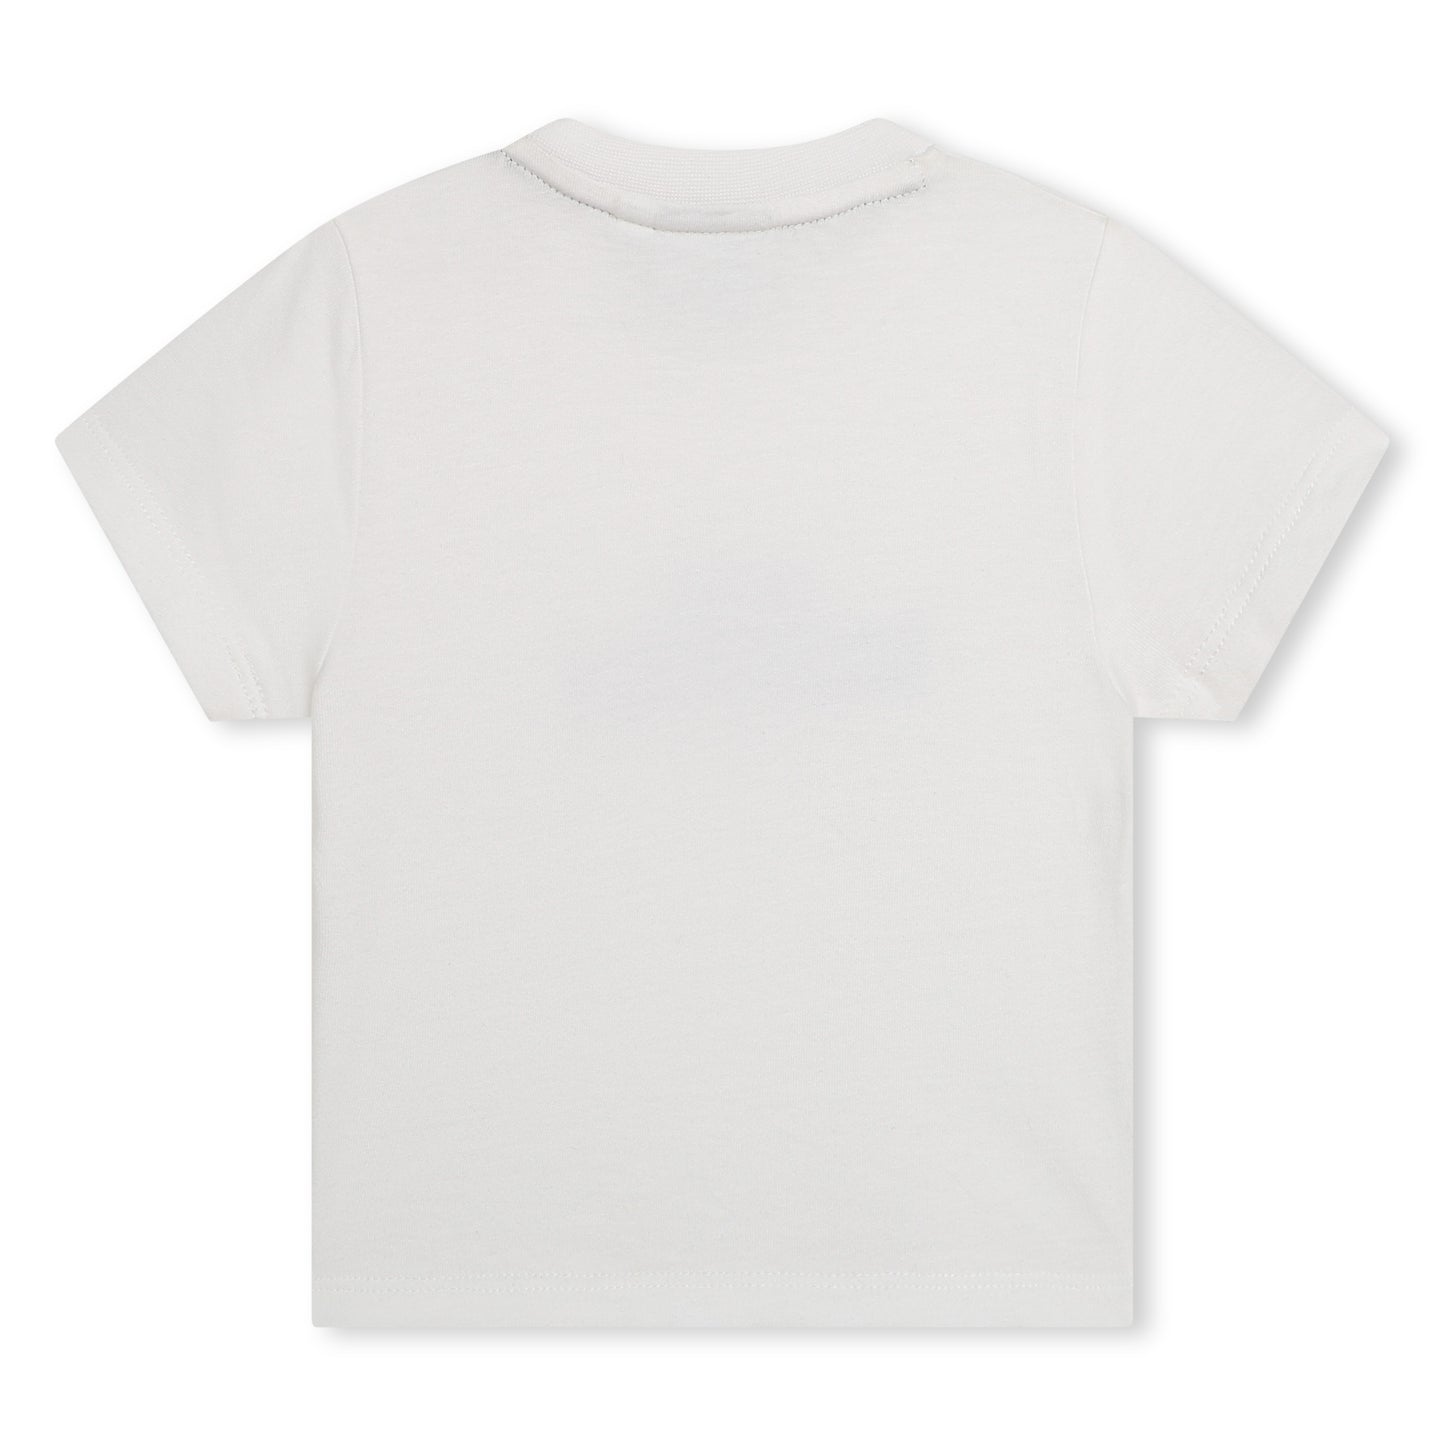 Hugo Boss Baby Boy's White & Blue Cotton T-Shirt Set